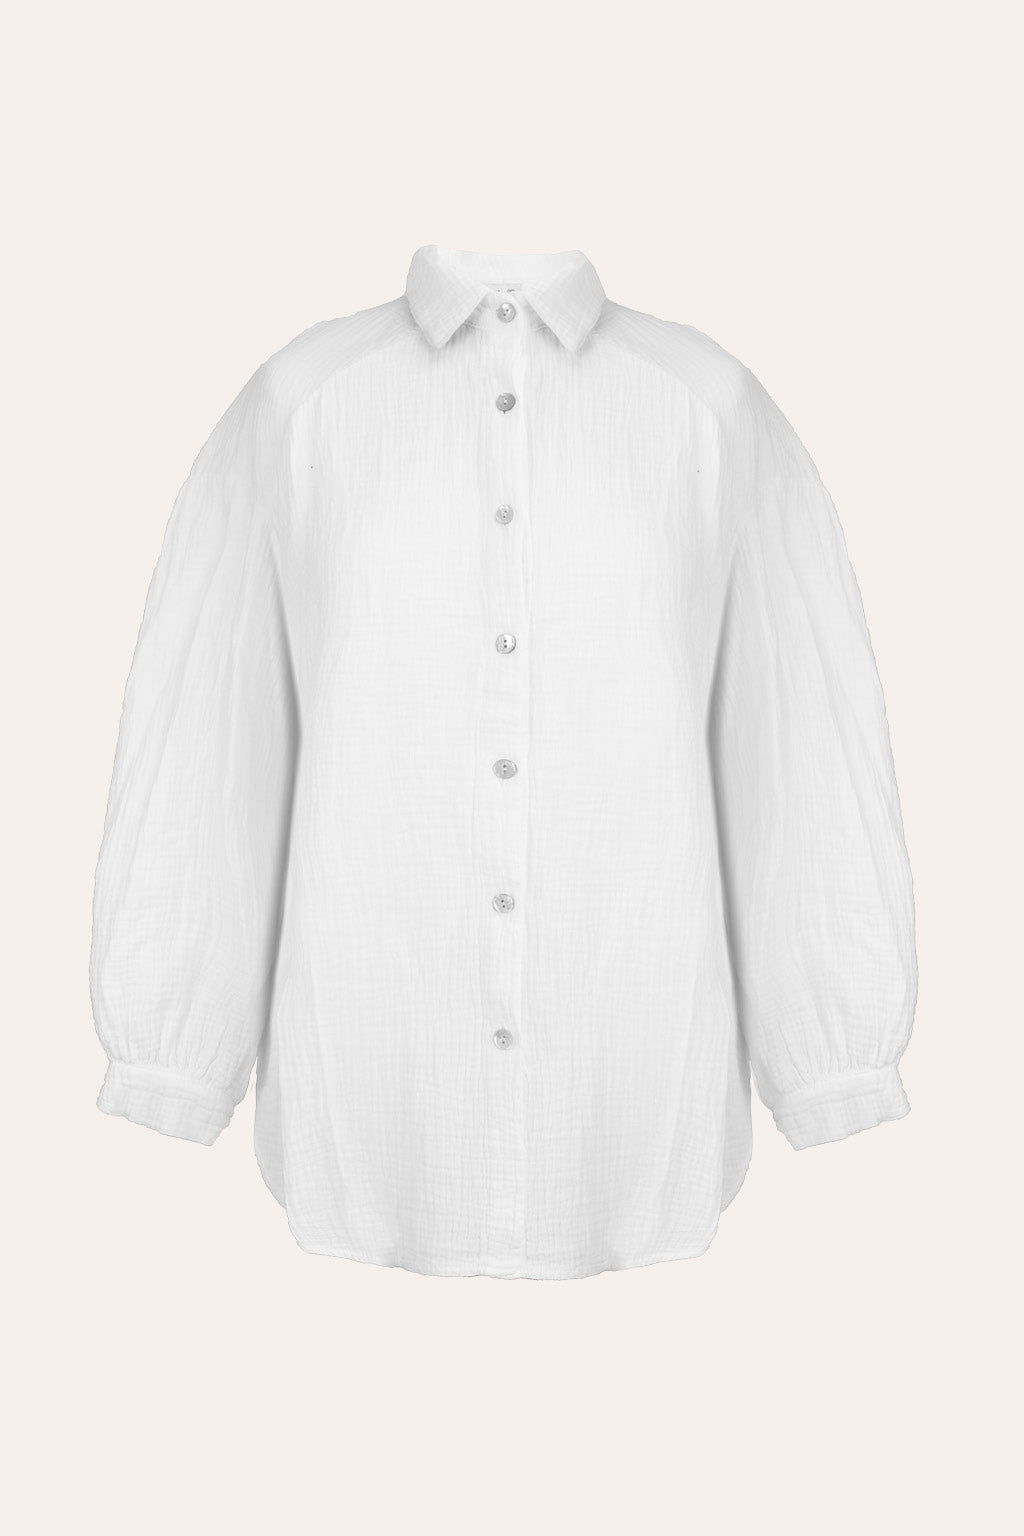 Kurze Musselin Bluse in weiß kaufen